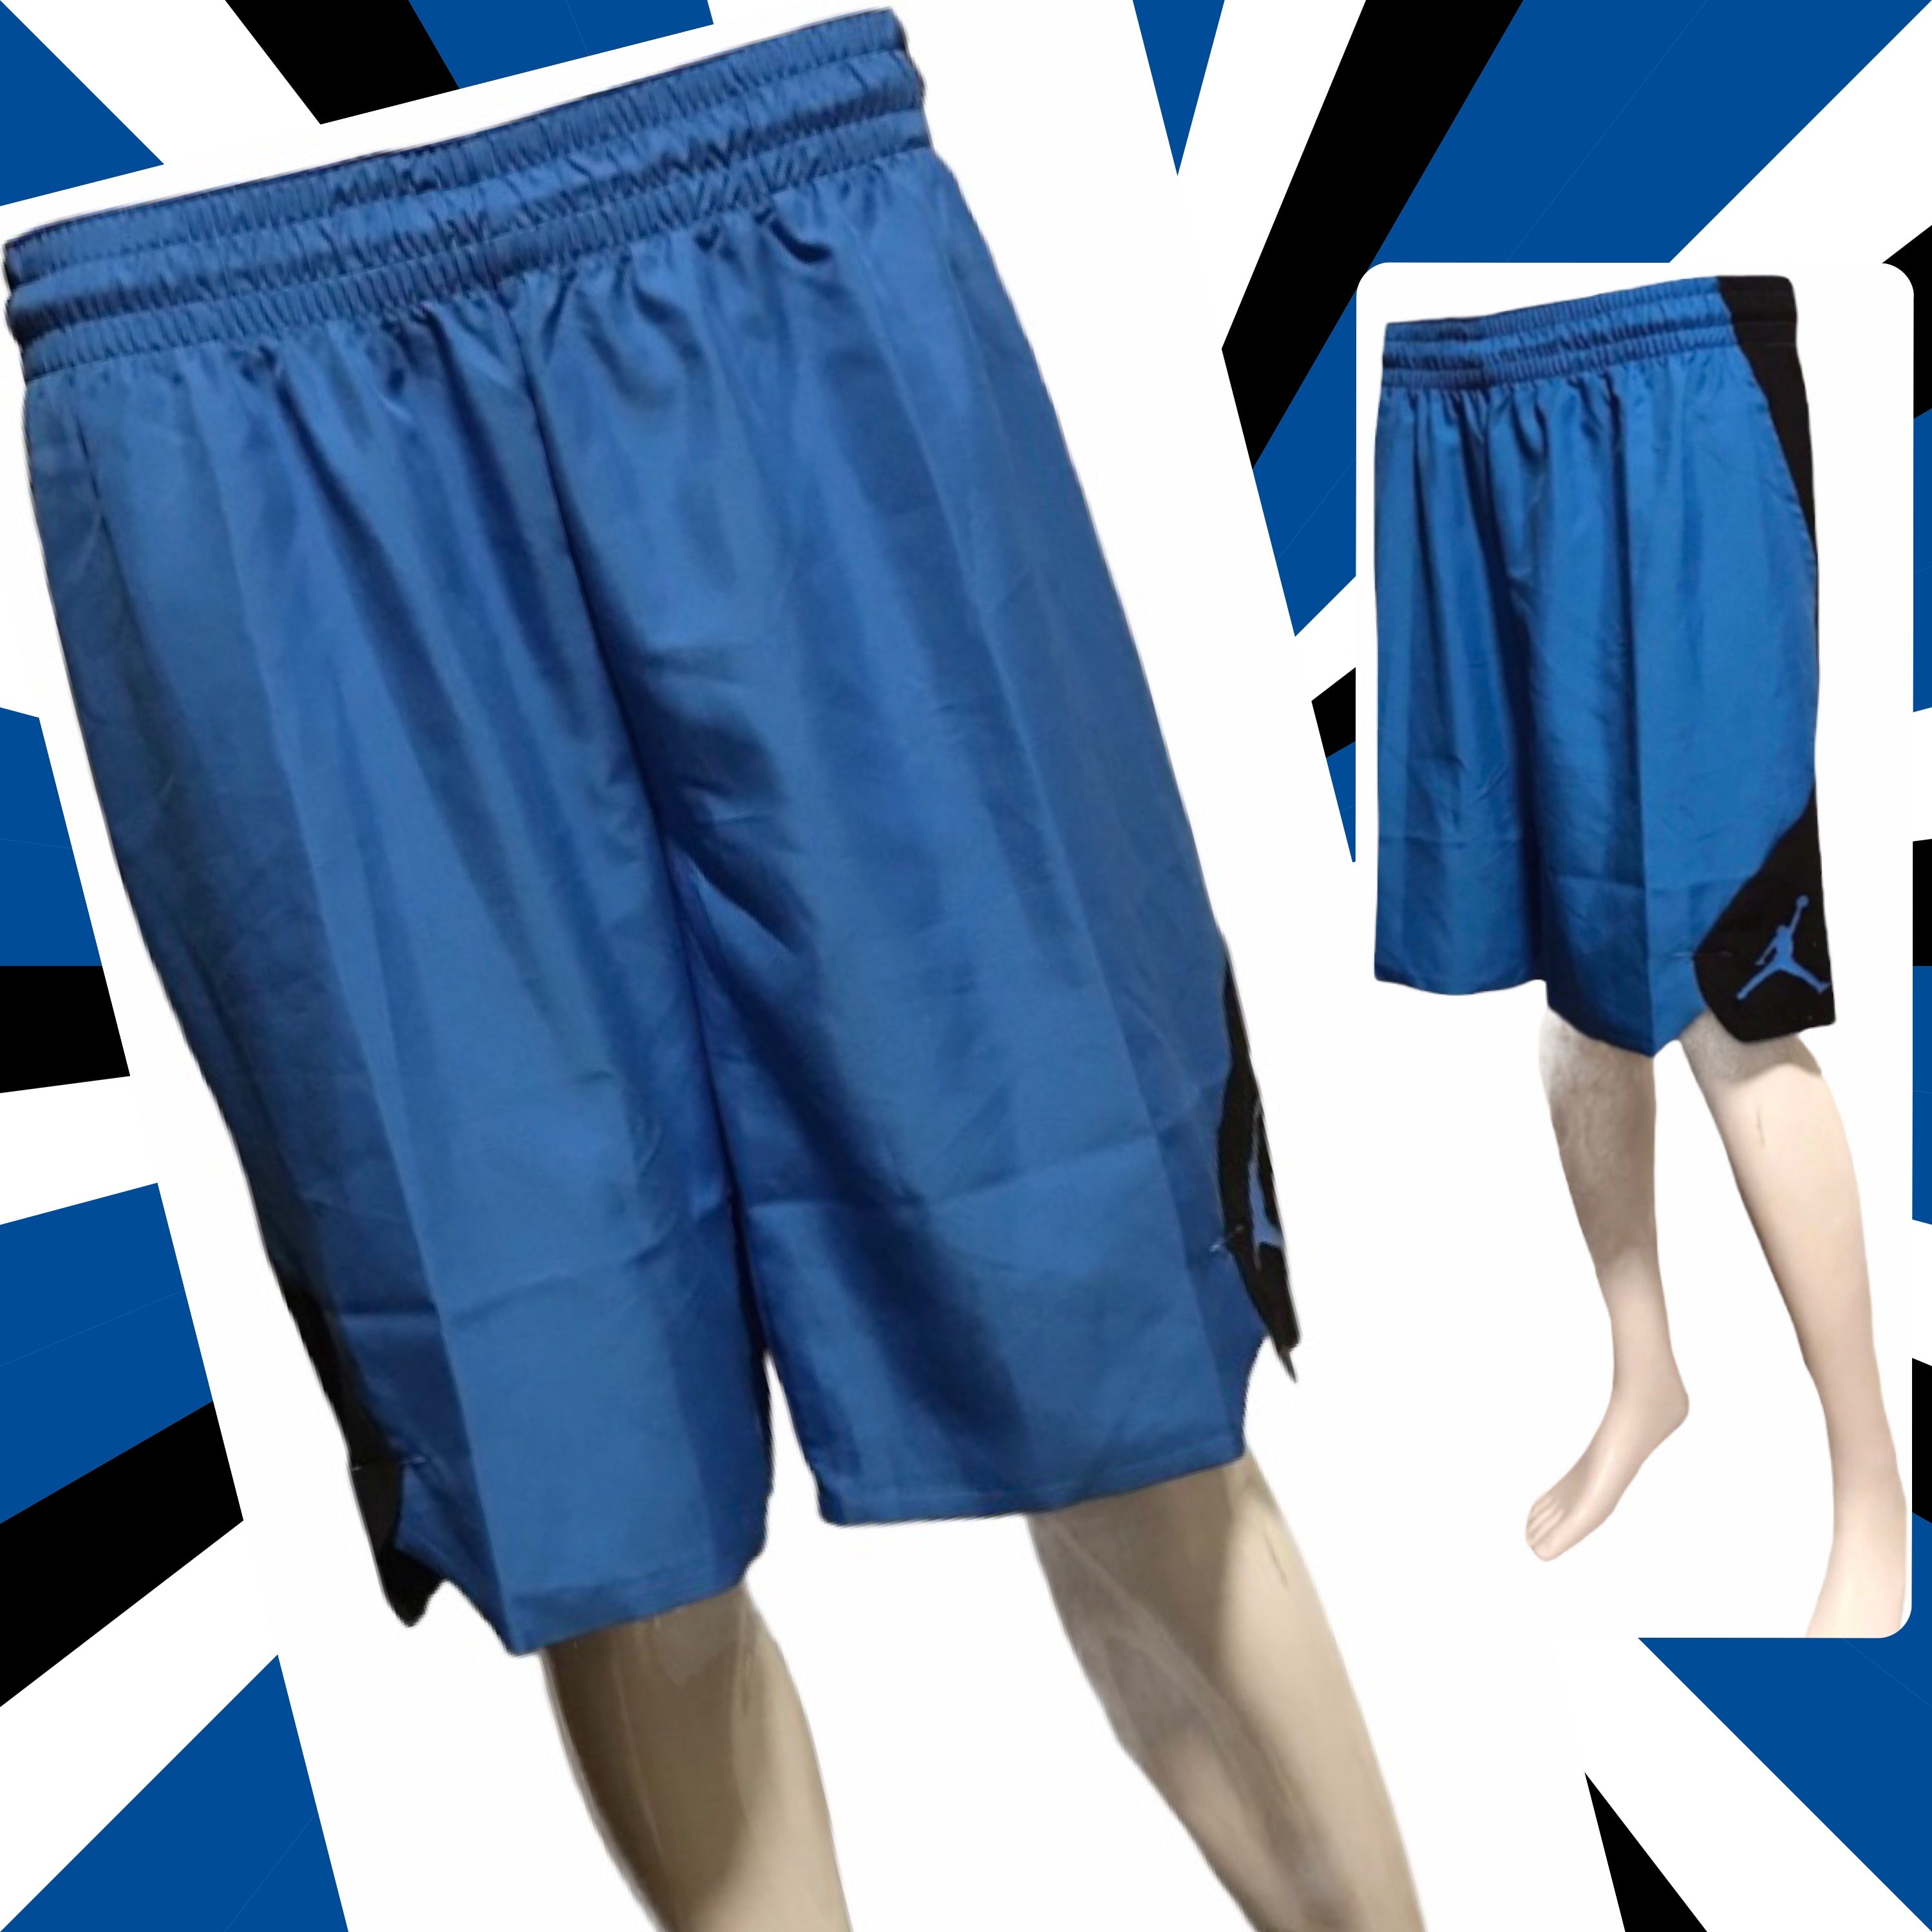 blue and black jordan shorts